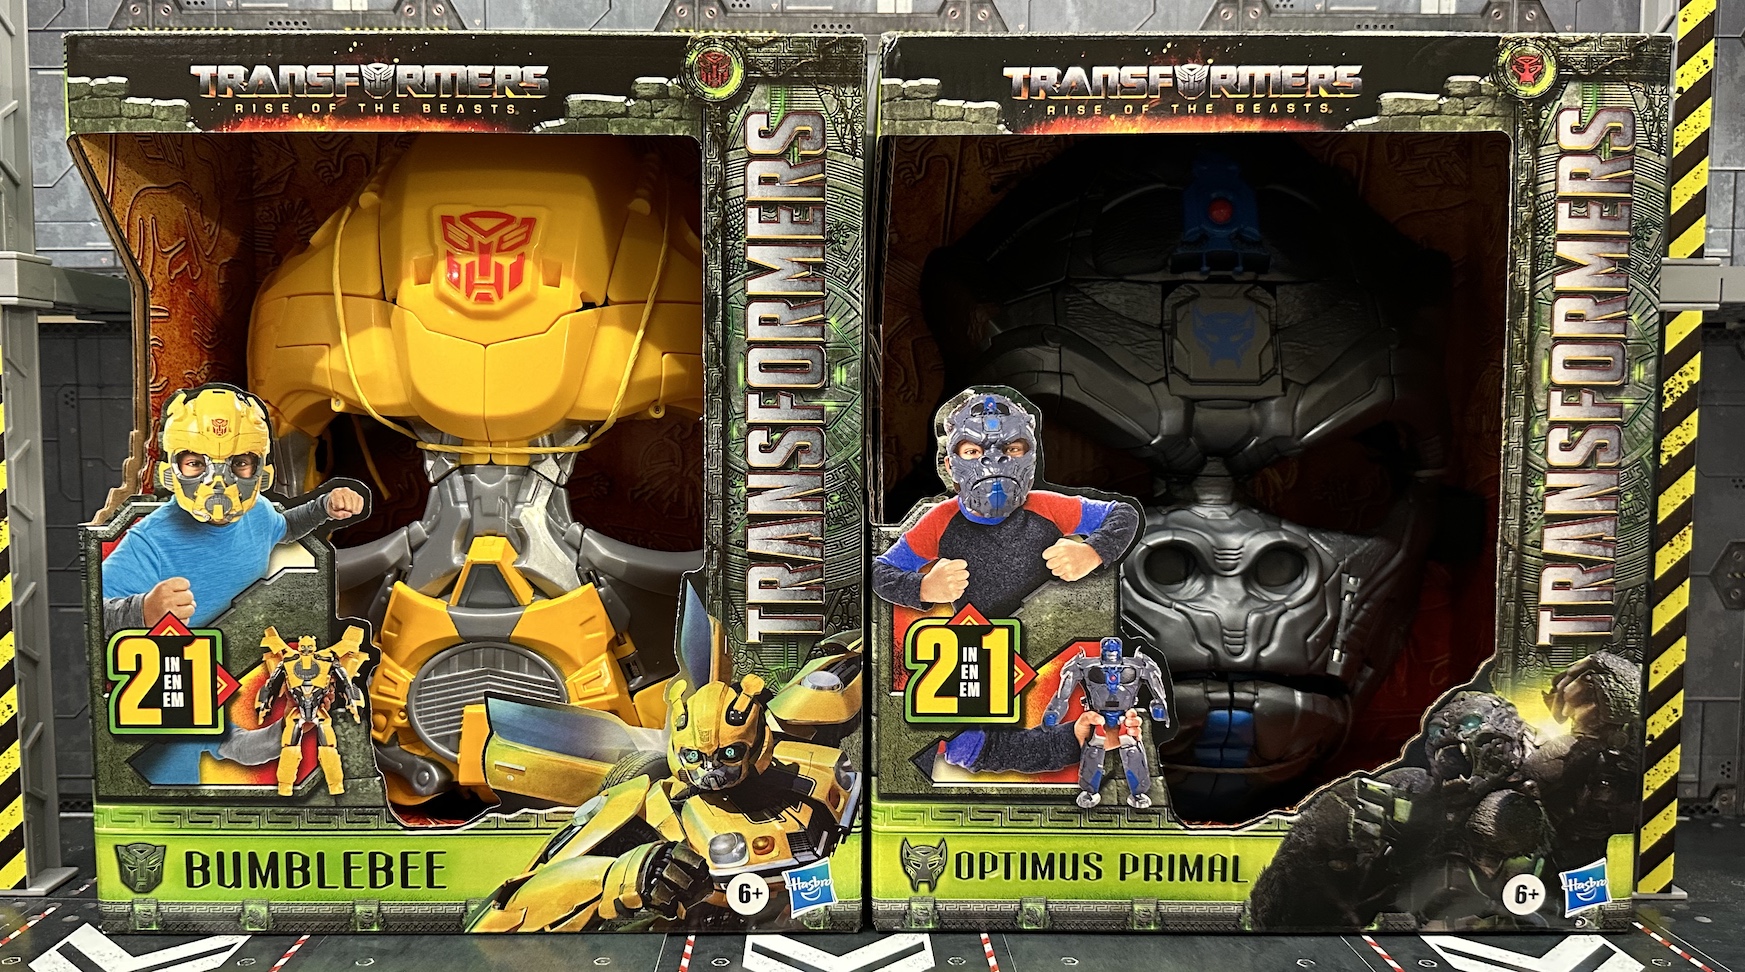 Transformers Rise of the Beasts Autobots Unite Optimus Prime Nitro